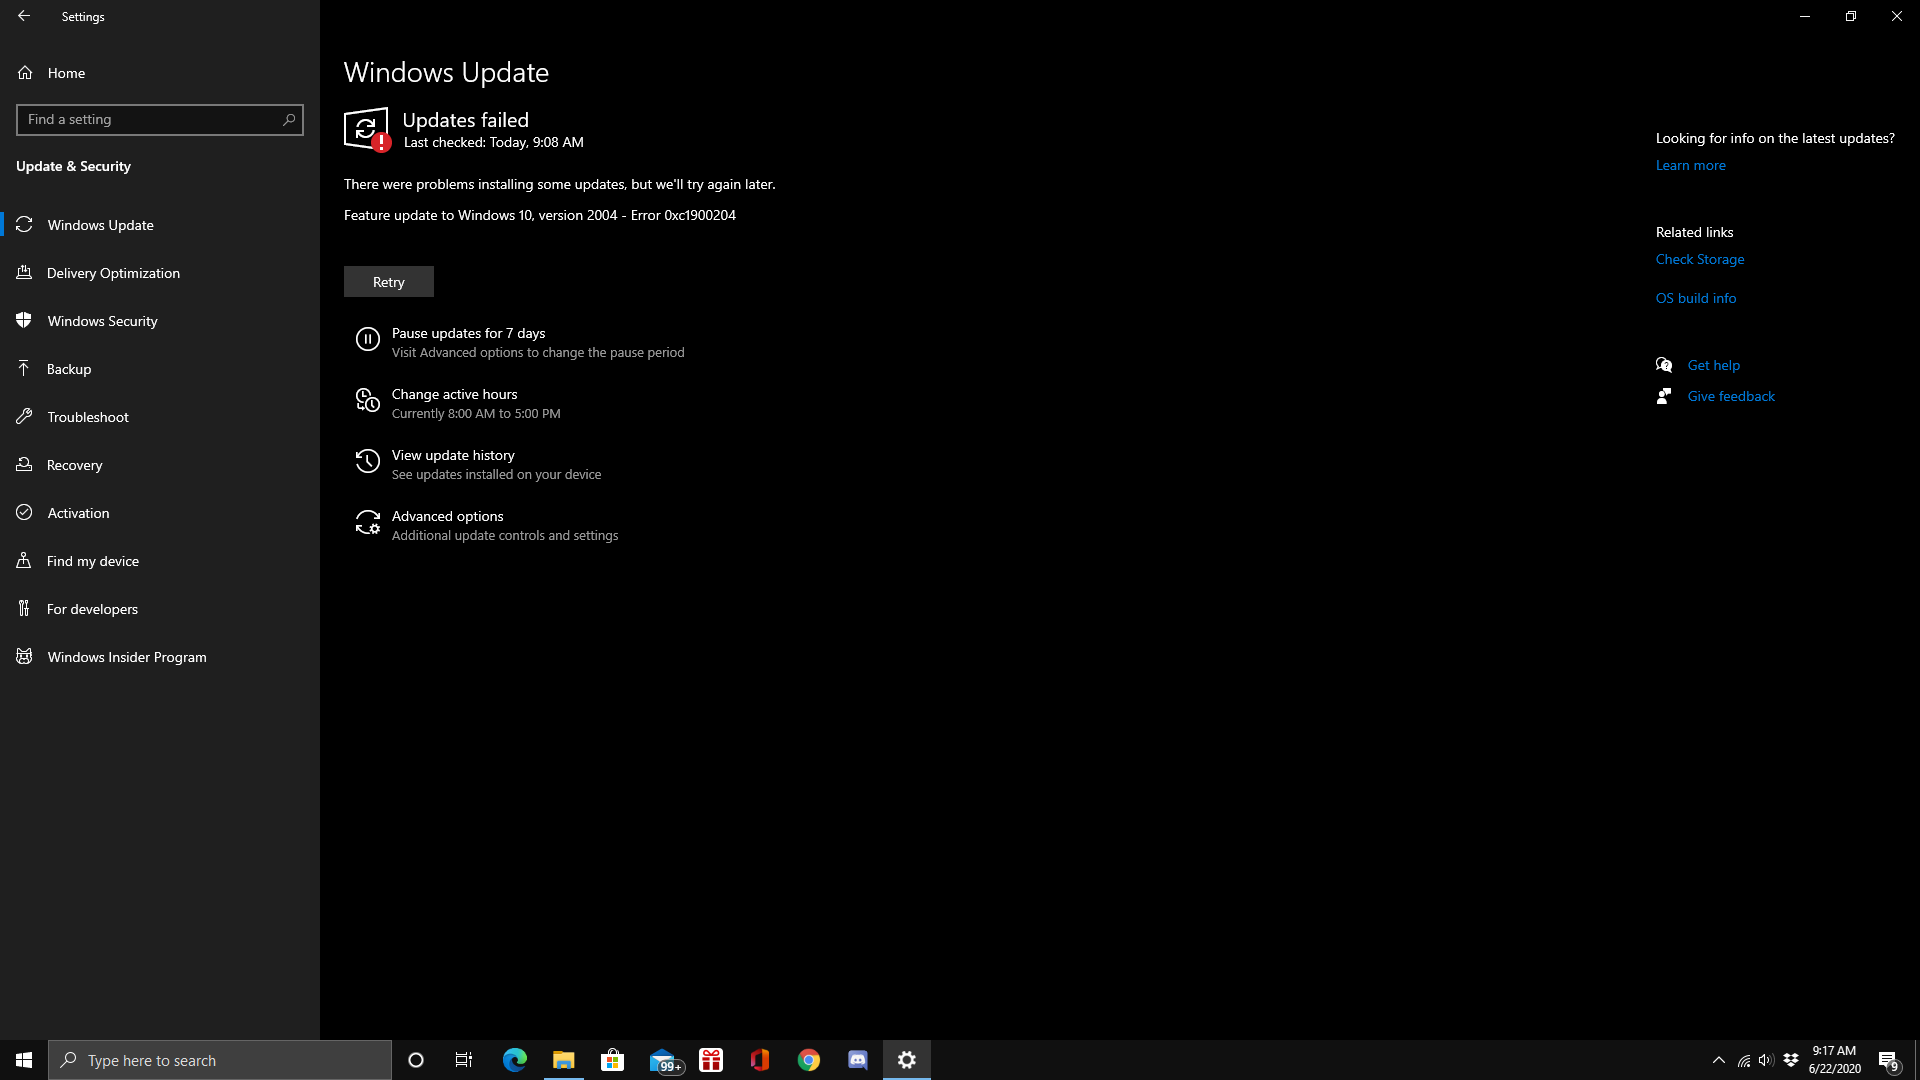 Windows Update Error 0xc1900204 Issue 2578df9f-f8b6-45a0-990f-3c00c435f5fd?upload=true.png